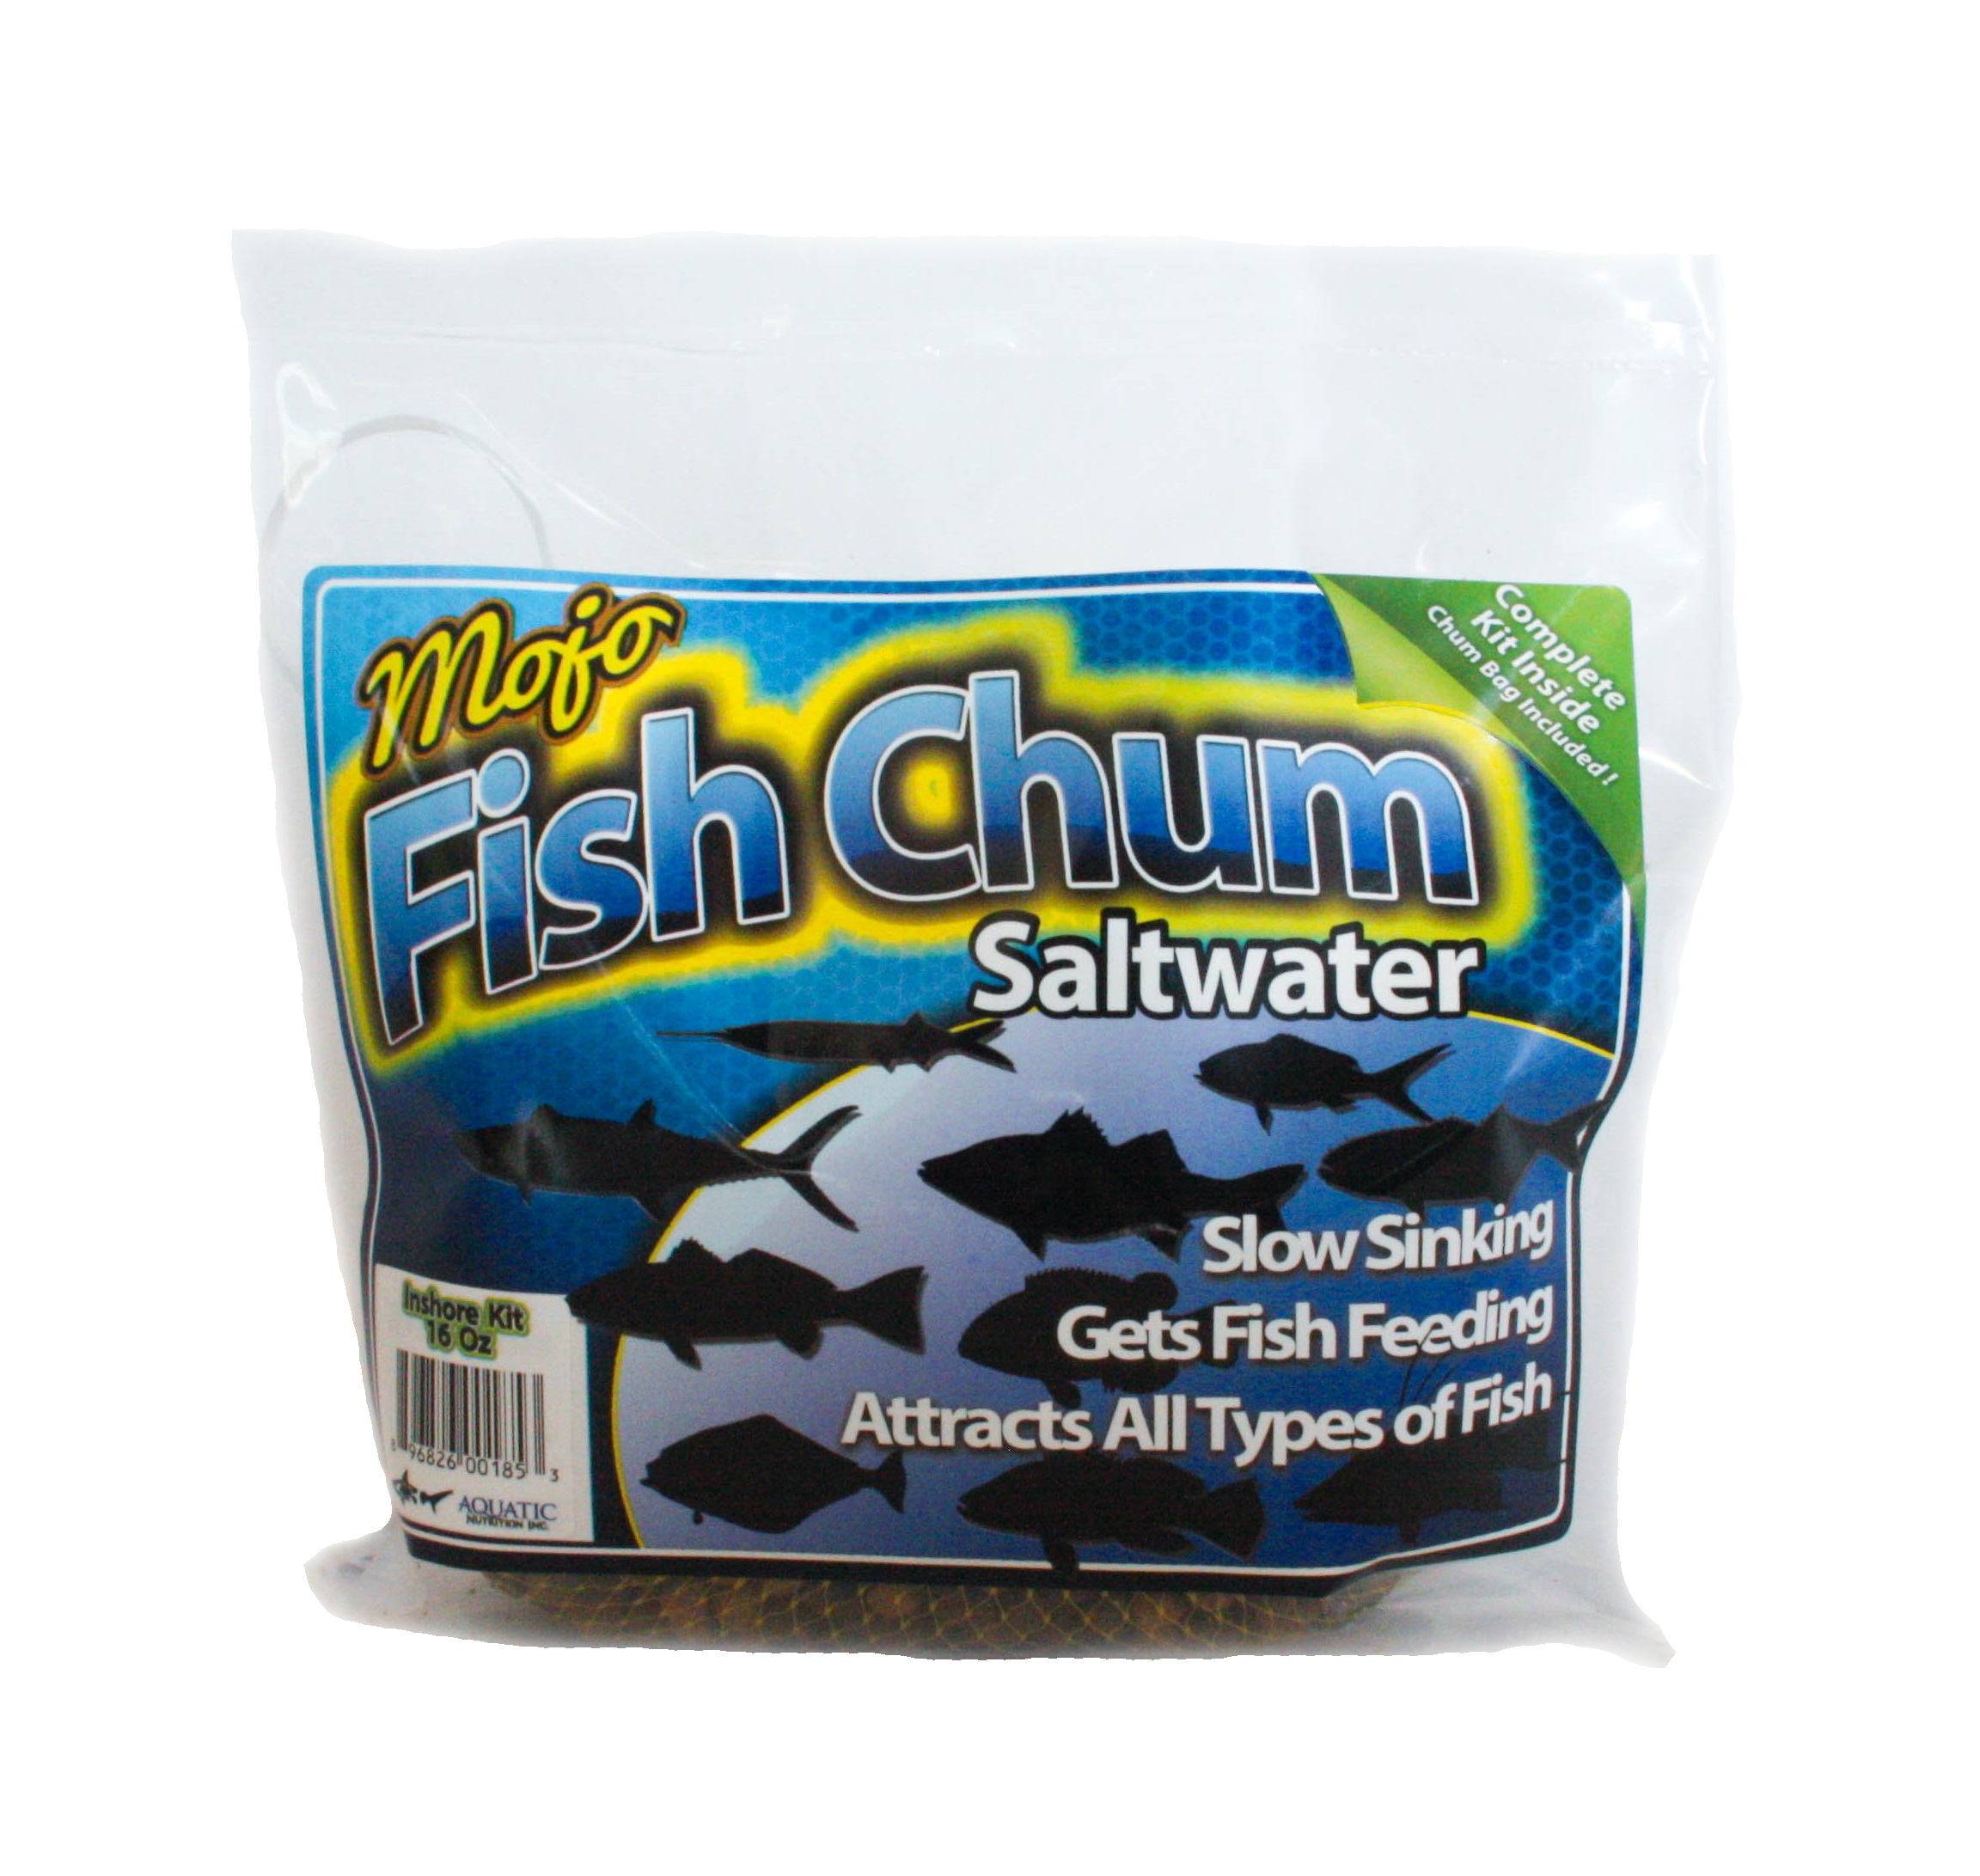 Mojo Inshore Saltwater Chum 1lb Great Fish Chum - Low Price [Mojo